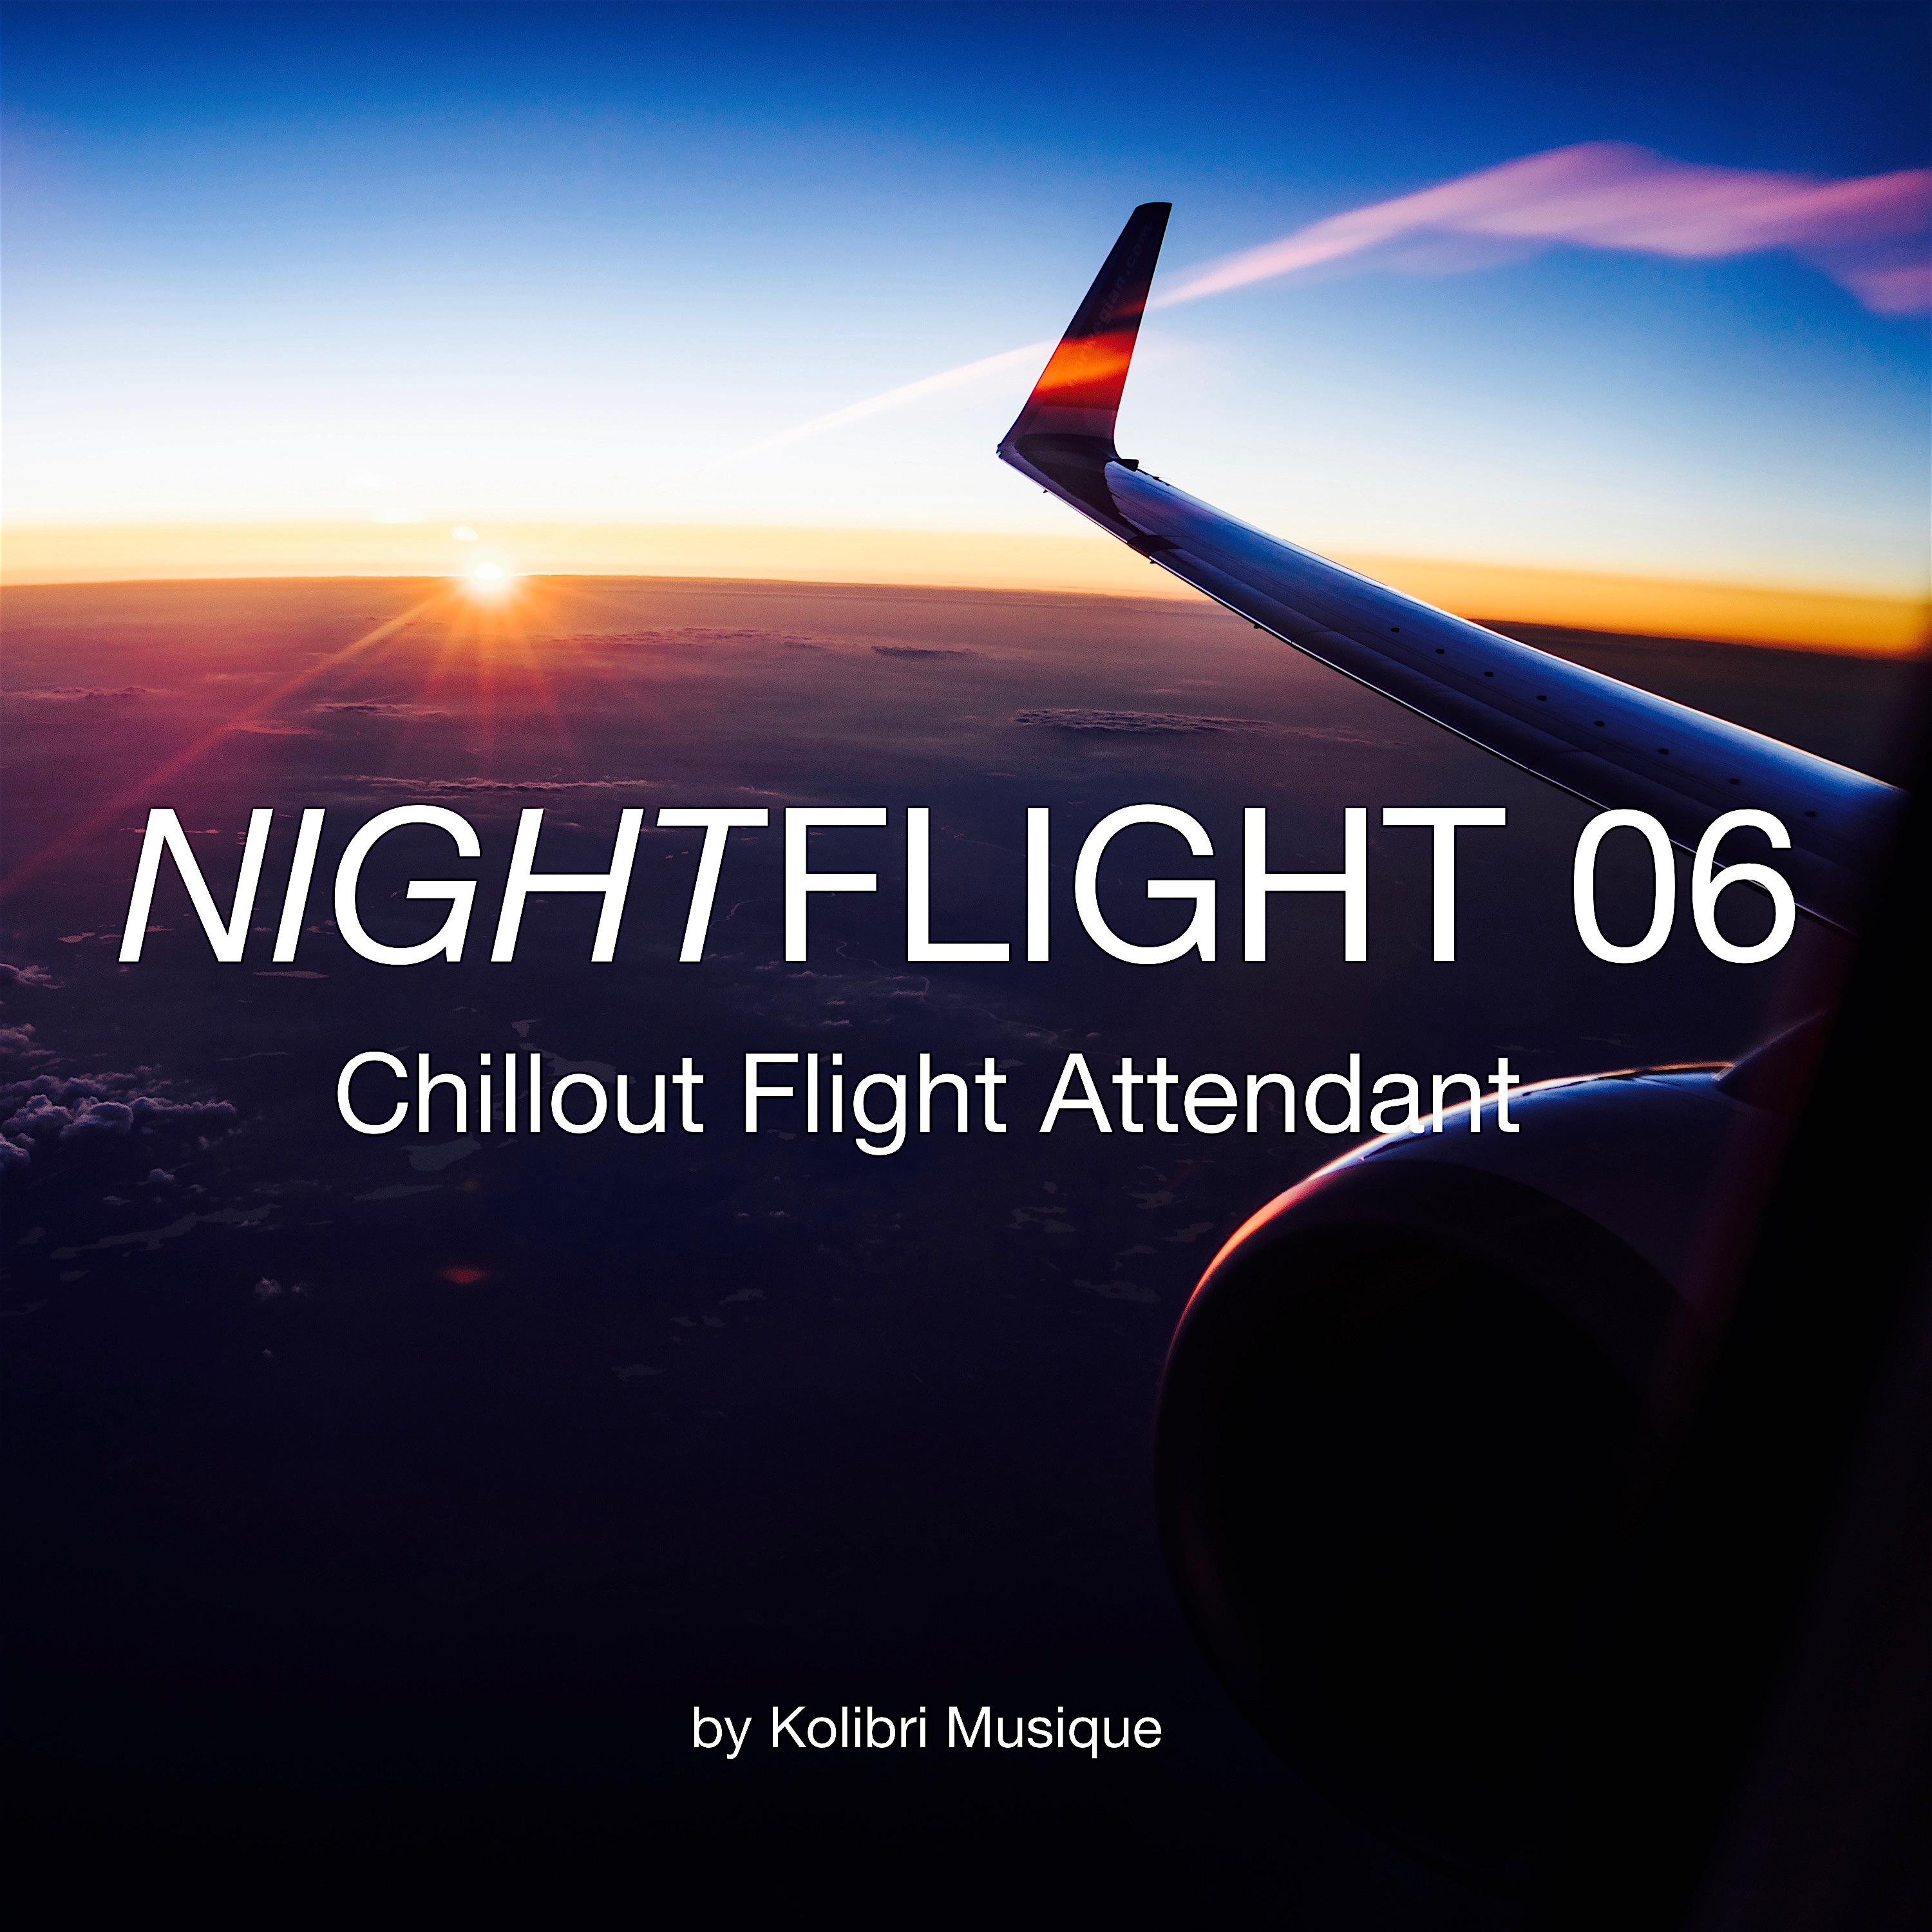 Nightflight 06 Chillout Flight Attendant (Mixed by Kolibri Musique) [Continuous DJ Mix]